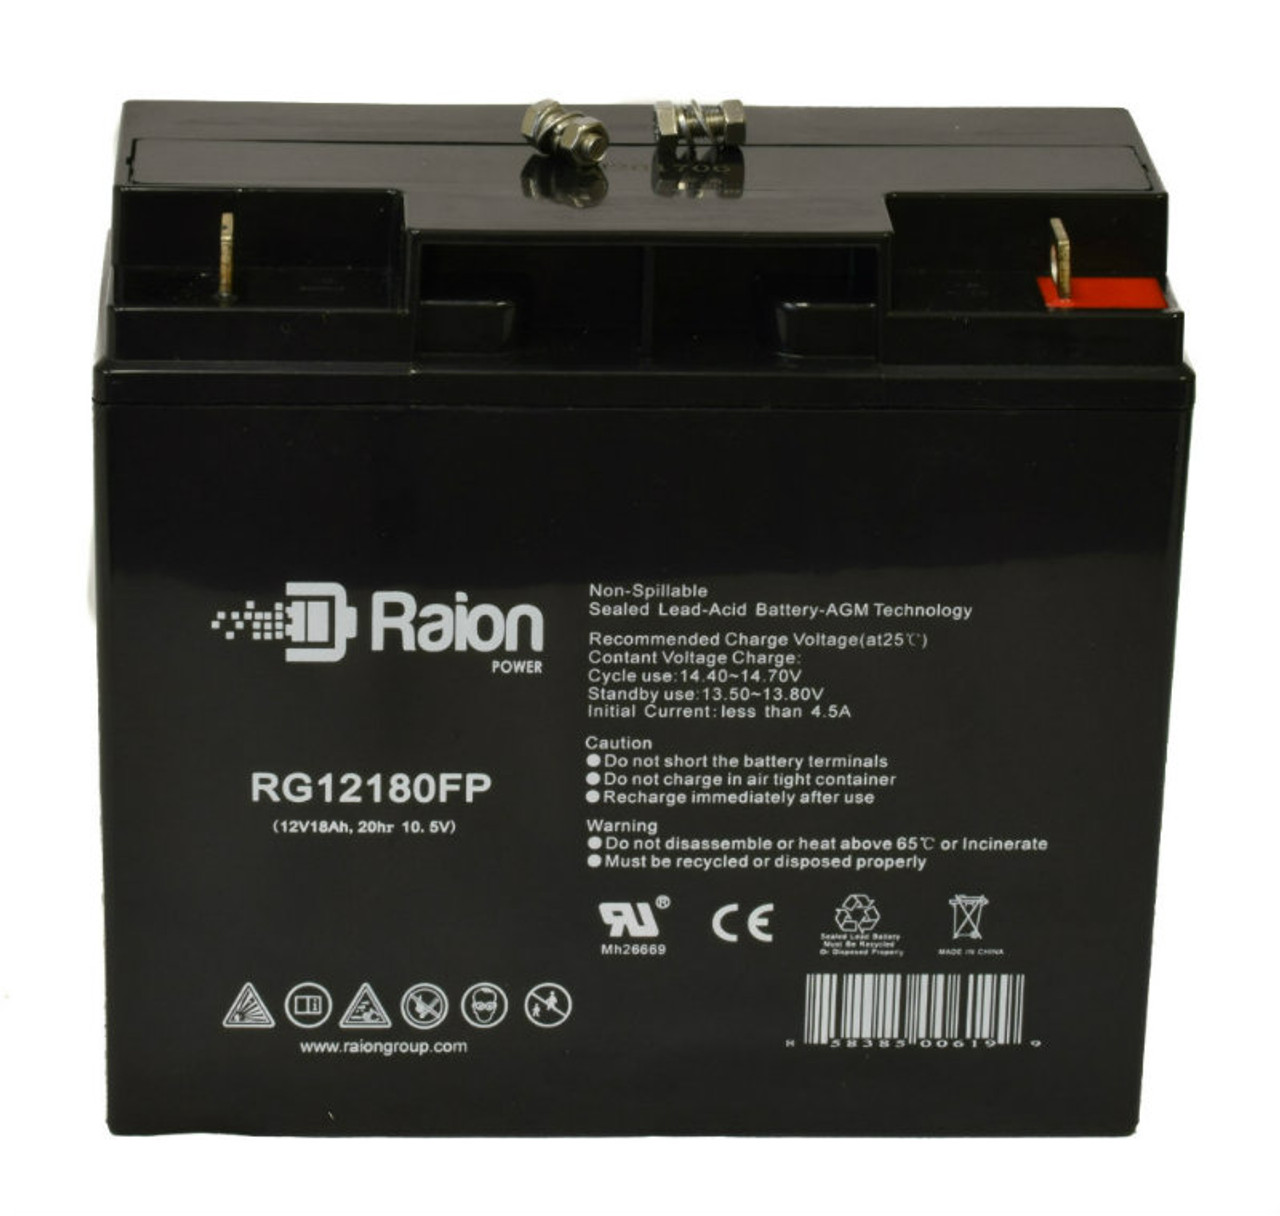 Raion Power RG12180FP 12V 18Ah Lead Acid Battery for Firman 357713553 Generator